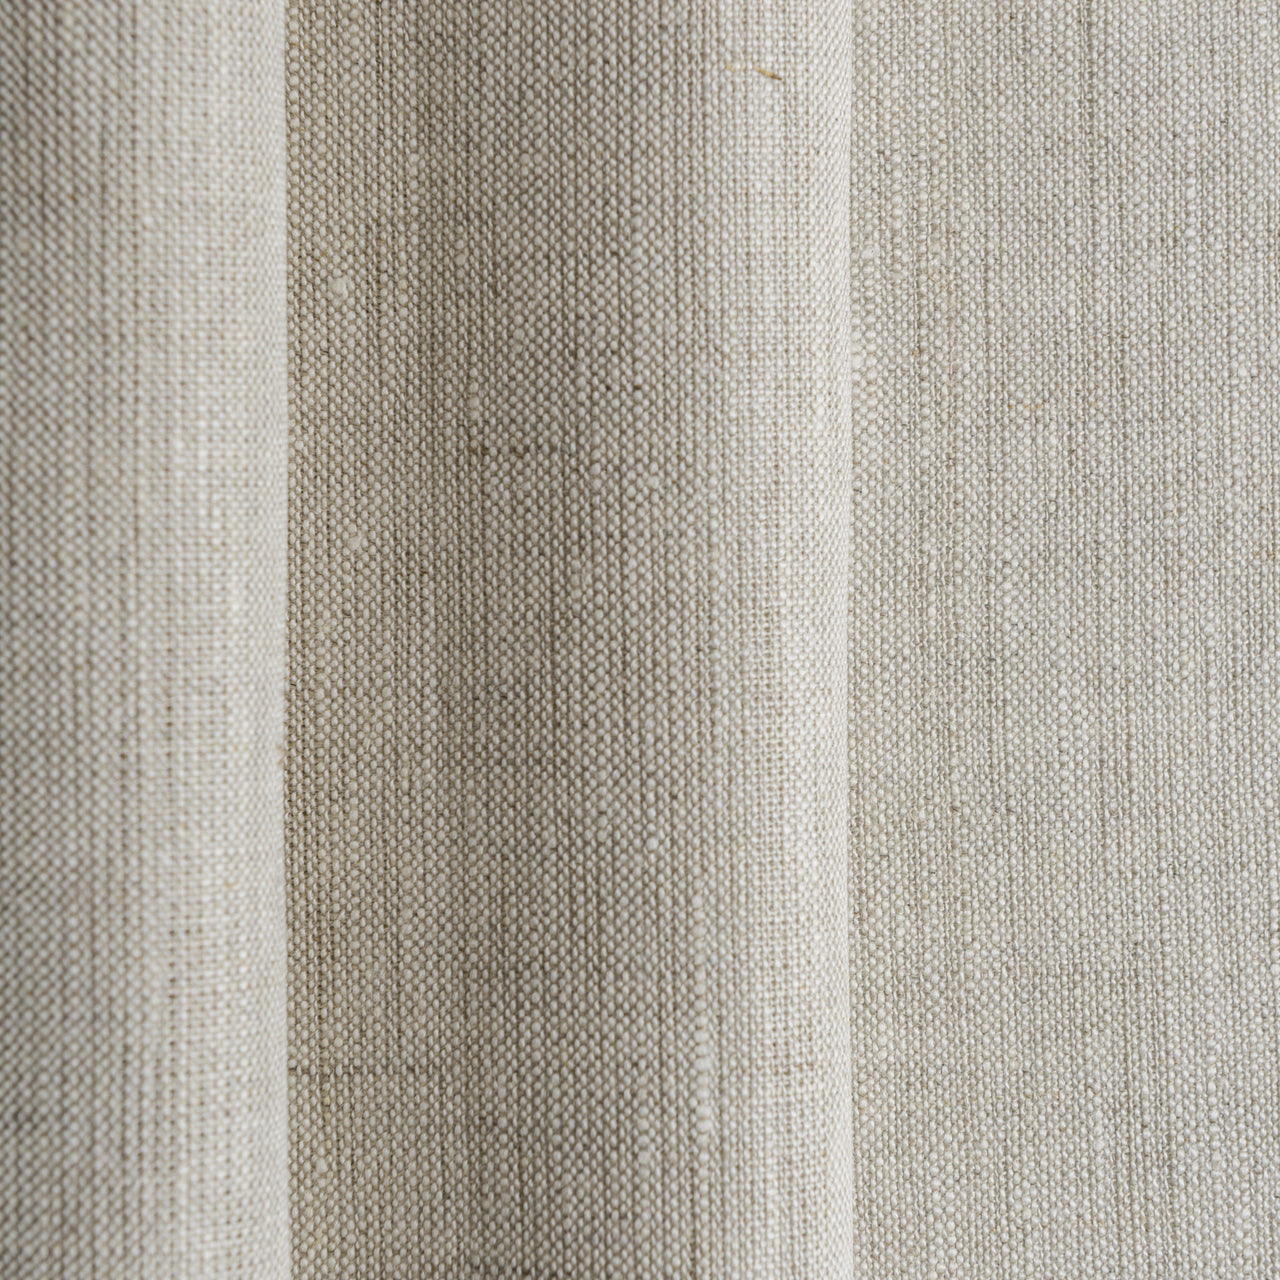 WHITE Linen Fabric / Pure White Linen Fabric / White Fabric by Yard /  Natural Fabrics